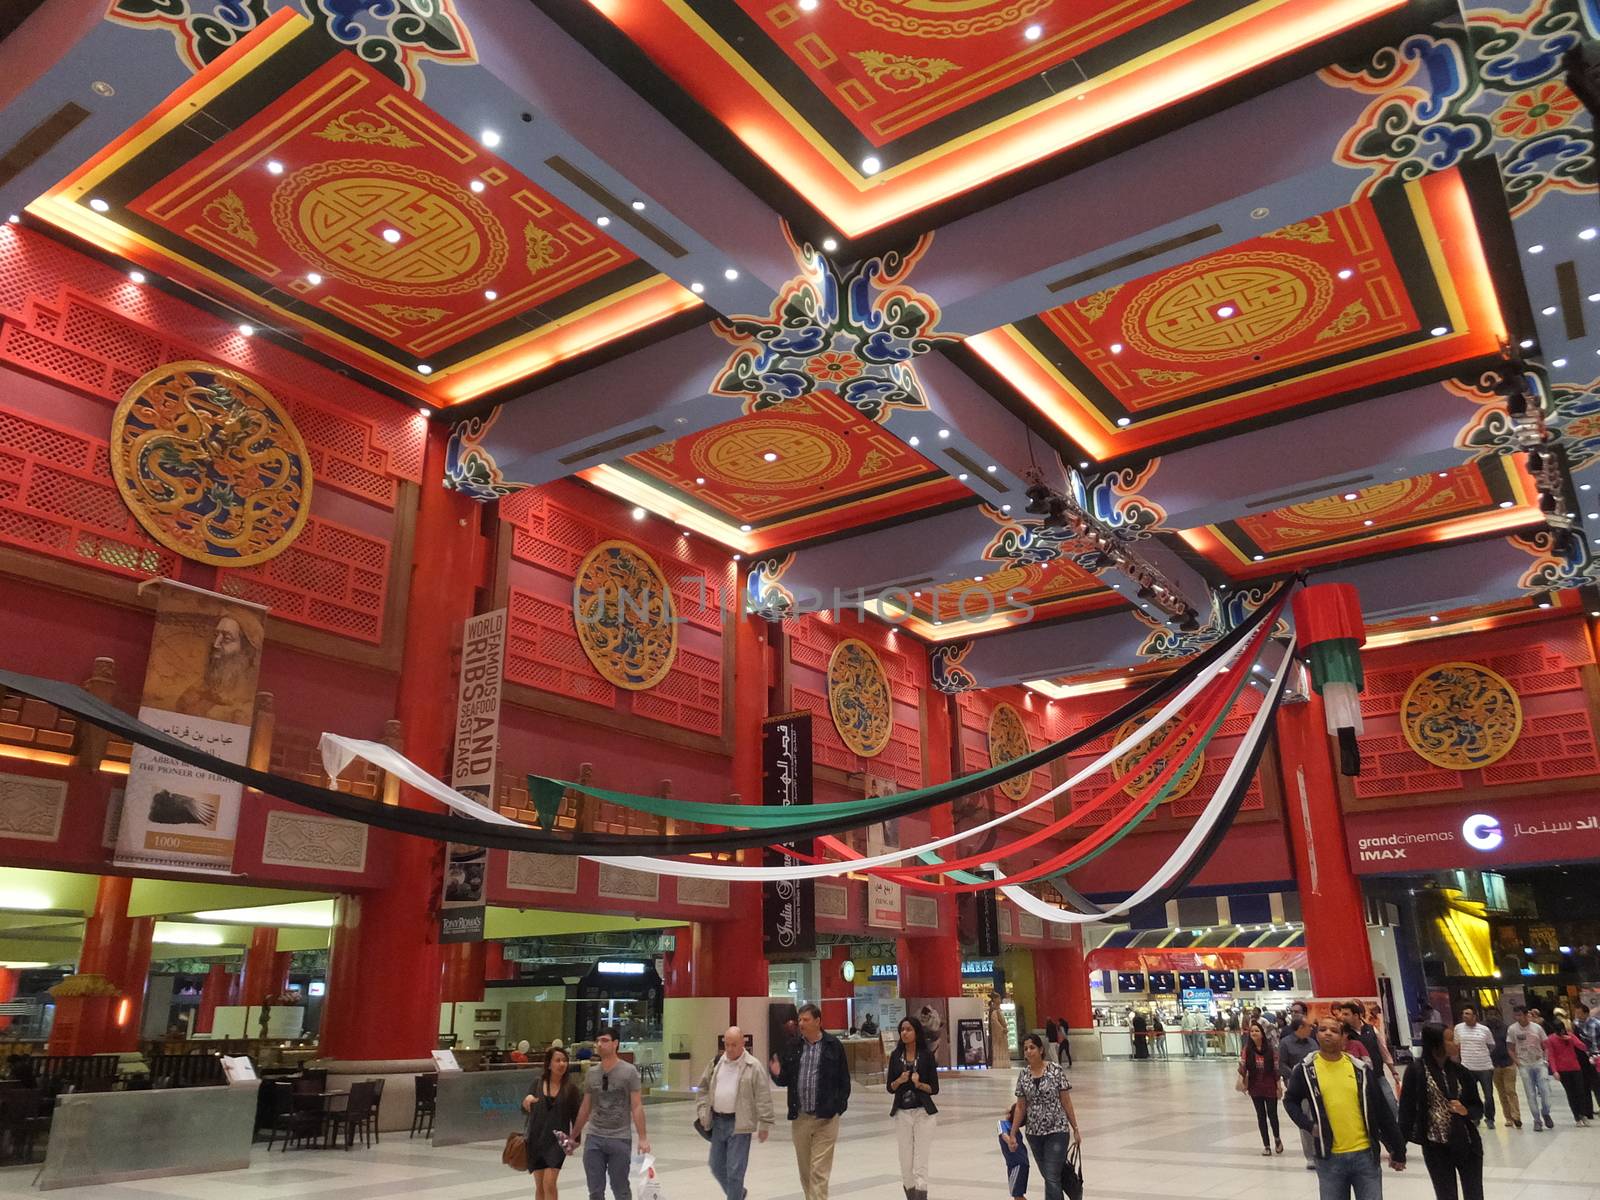 China Court at Ibn Battuta Mall in Dubai, UAE by sainaniritu